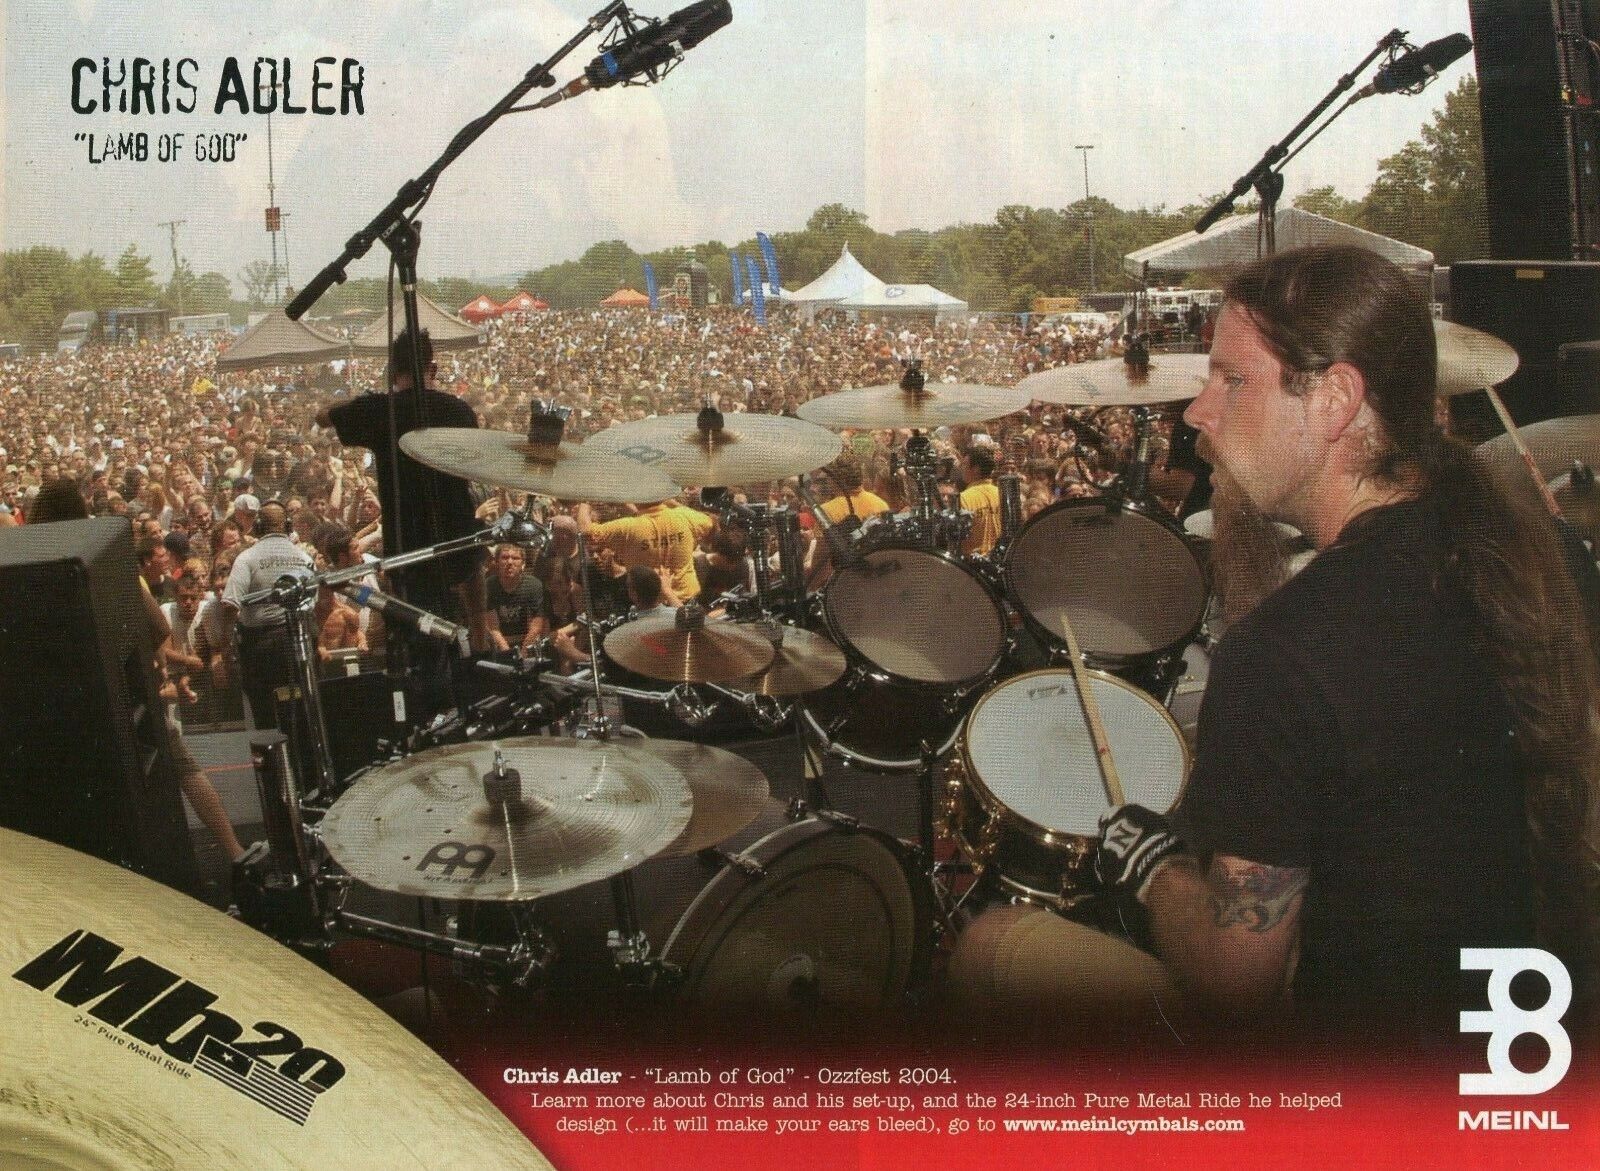 2006 Print Ad of Meinl MB20 Ride Cymbal w Chris Adler Lamb Of God Ozzfest 2004